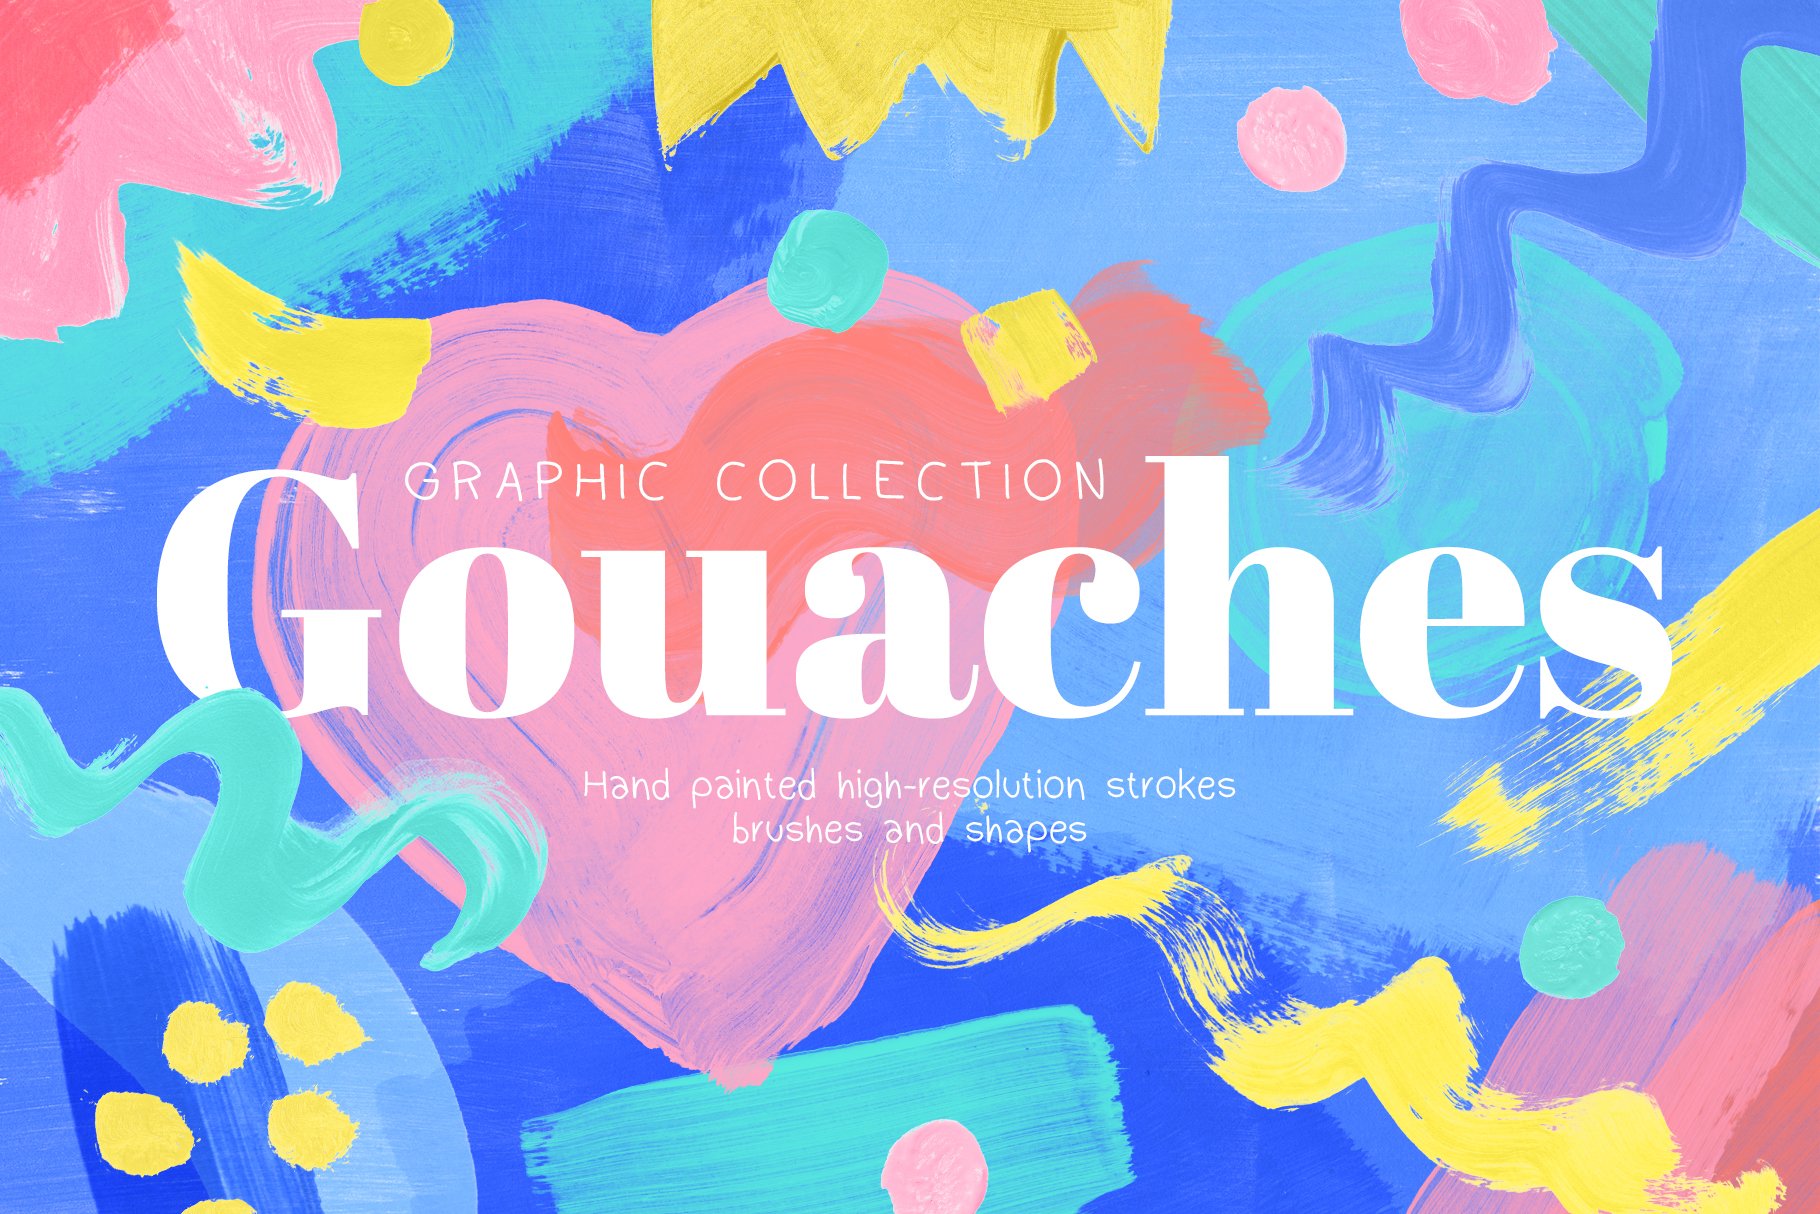 Gouache Paint Brush Strokes cover image.